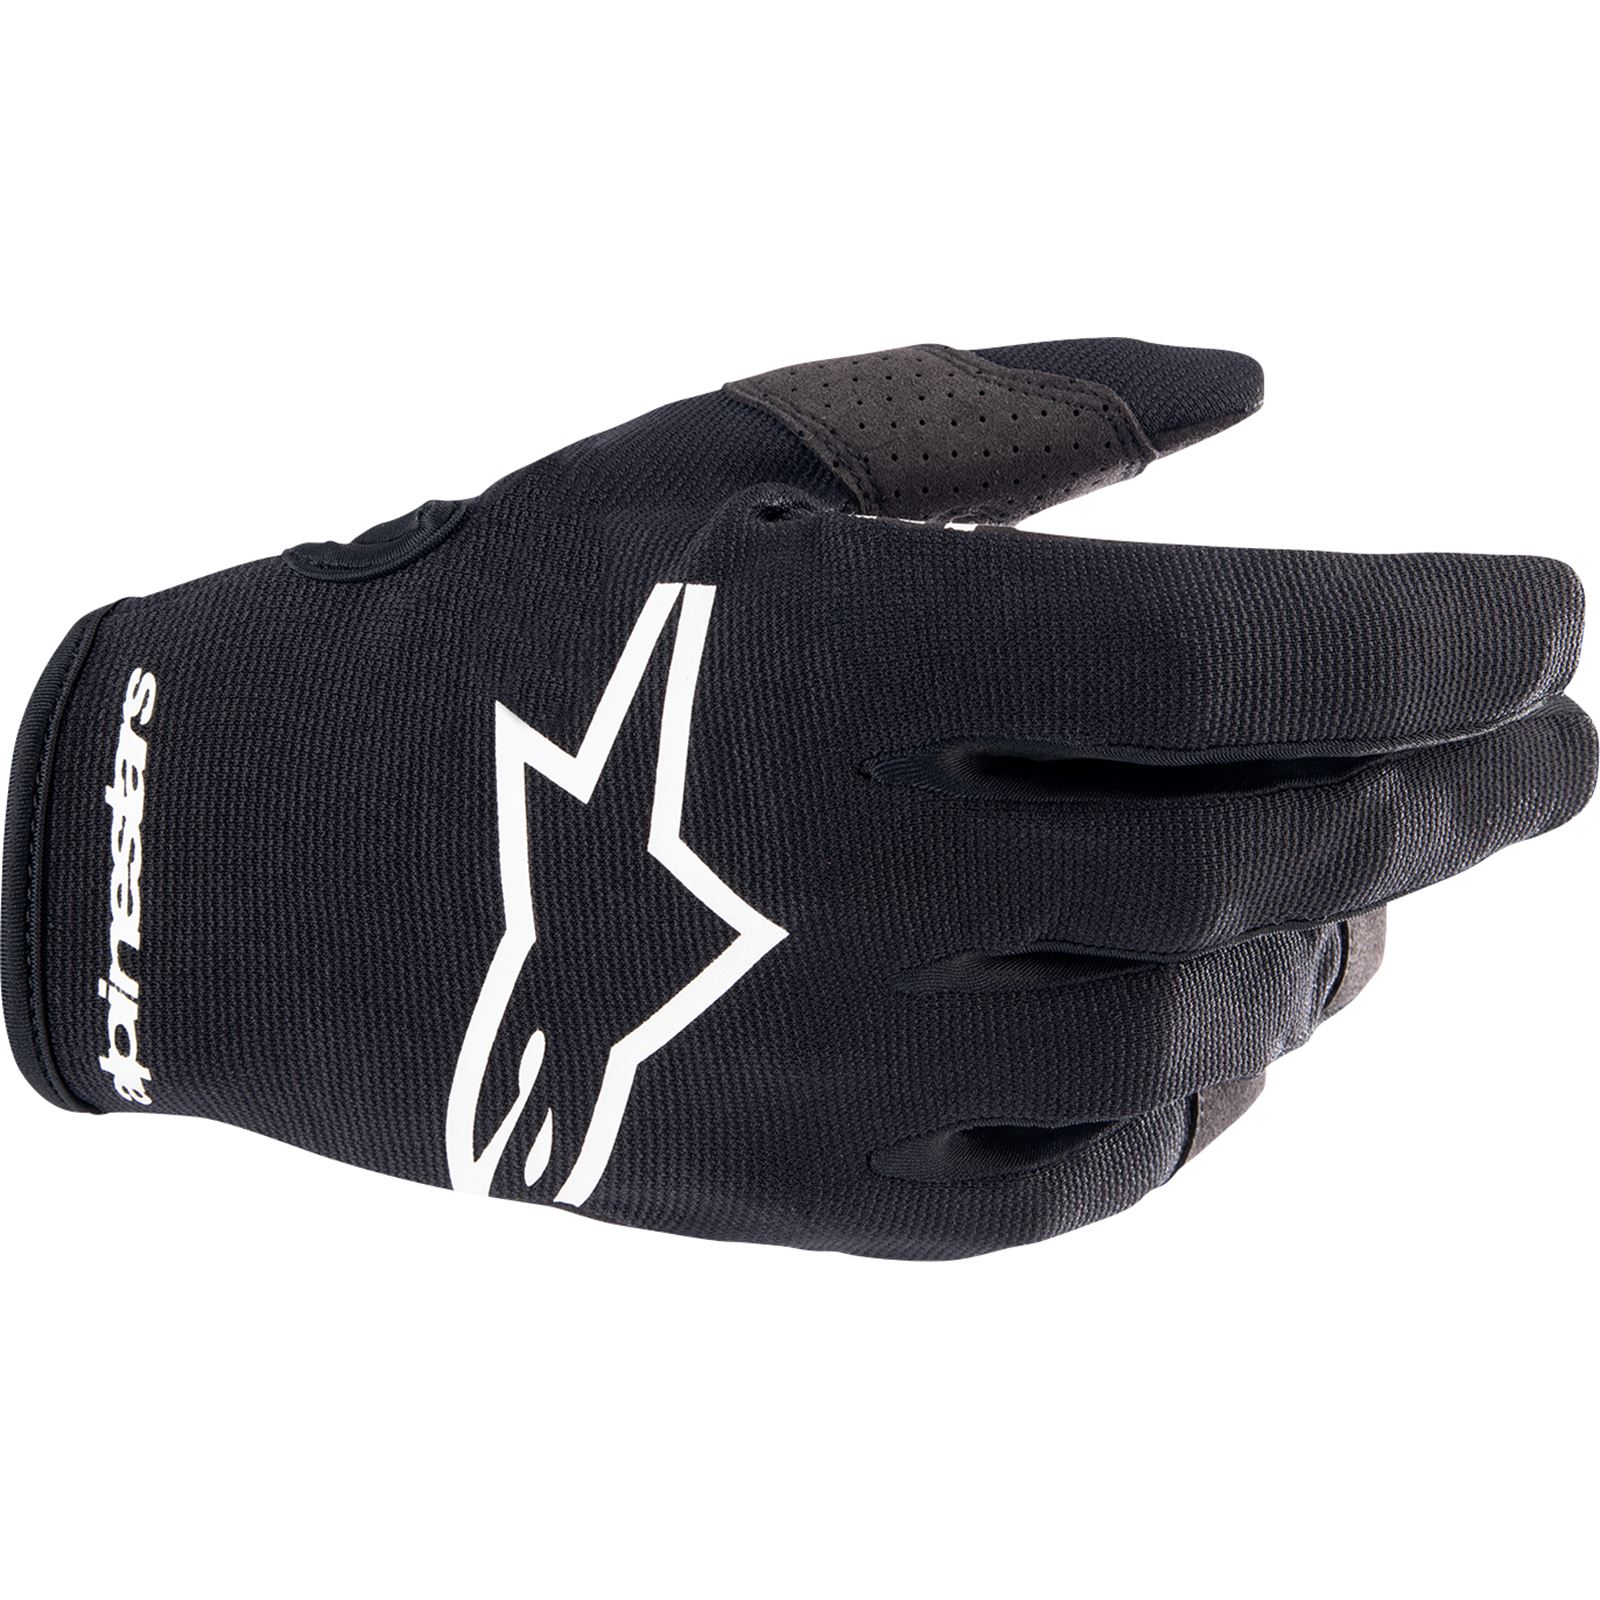 Alpinestars Youth Radar Gloves - Black - XS